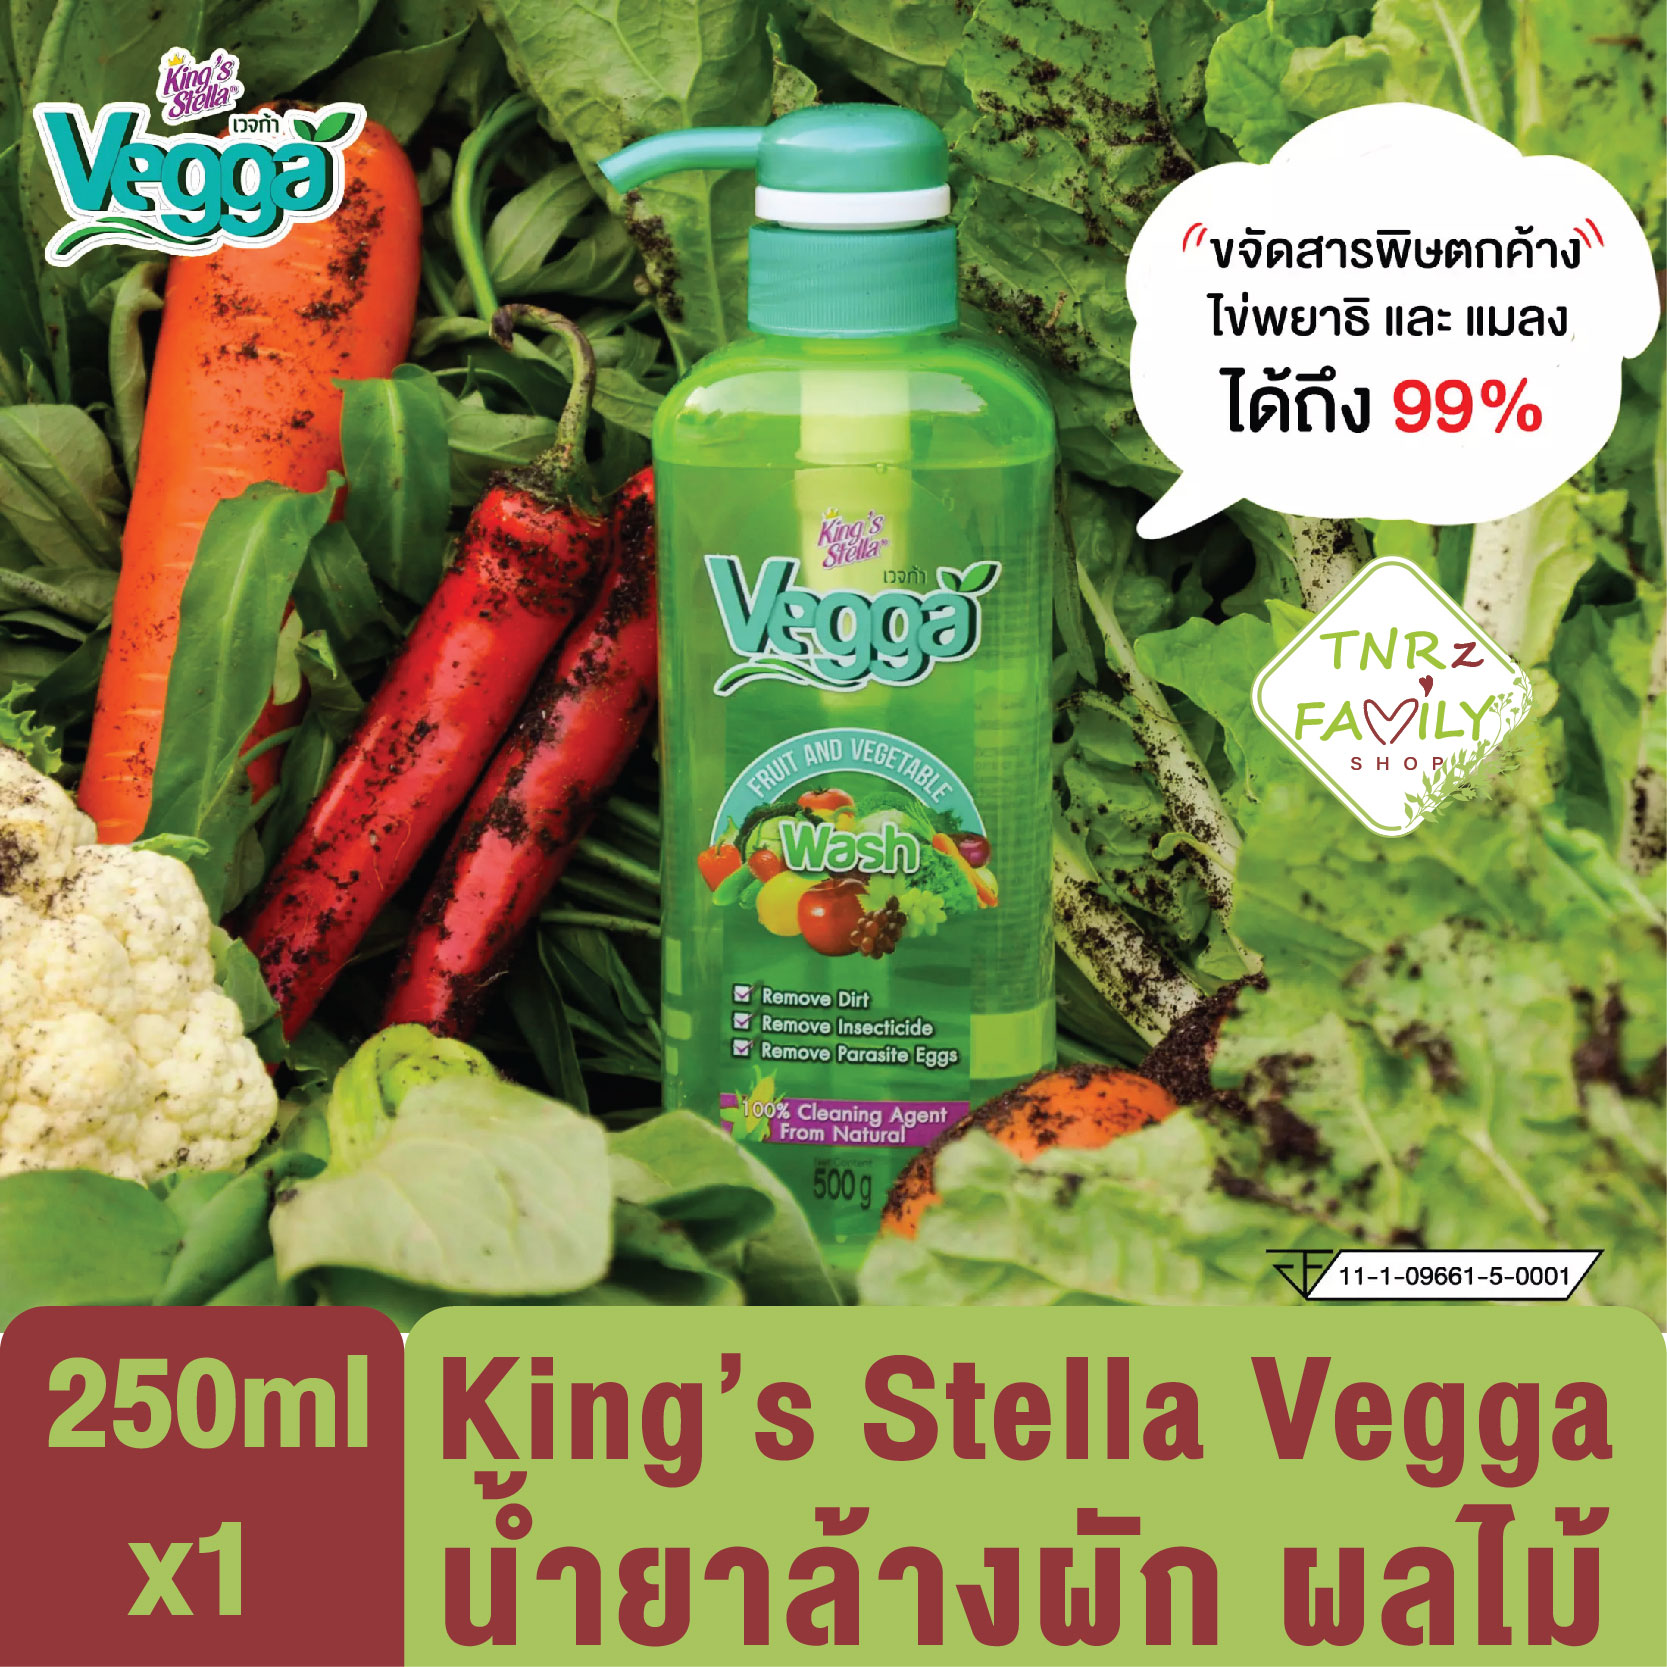 [250ml]King's Stella Vegga น้ำยาล้างผัก น้ำยาล้างผลไม้ ล้างสารพิษตกค้างได้ถึง 90%  ขนาด 250มล.